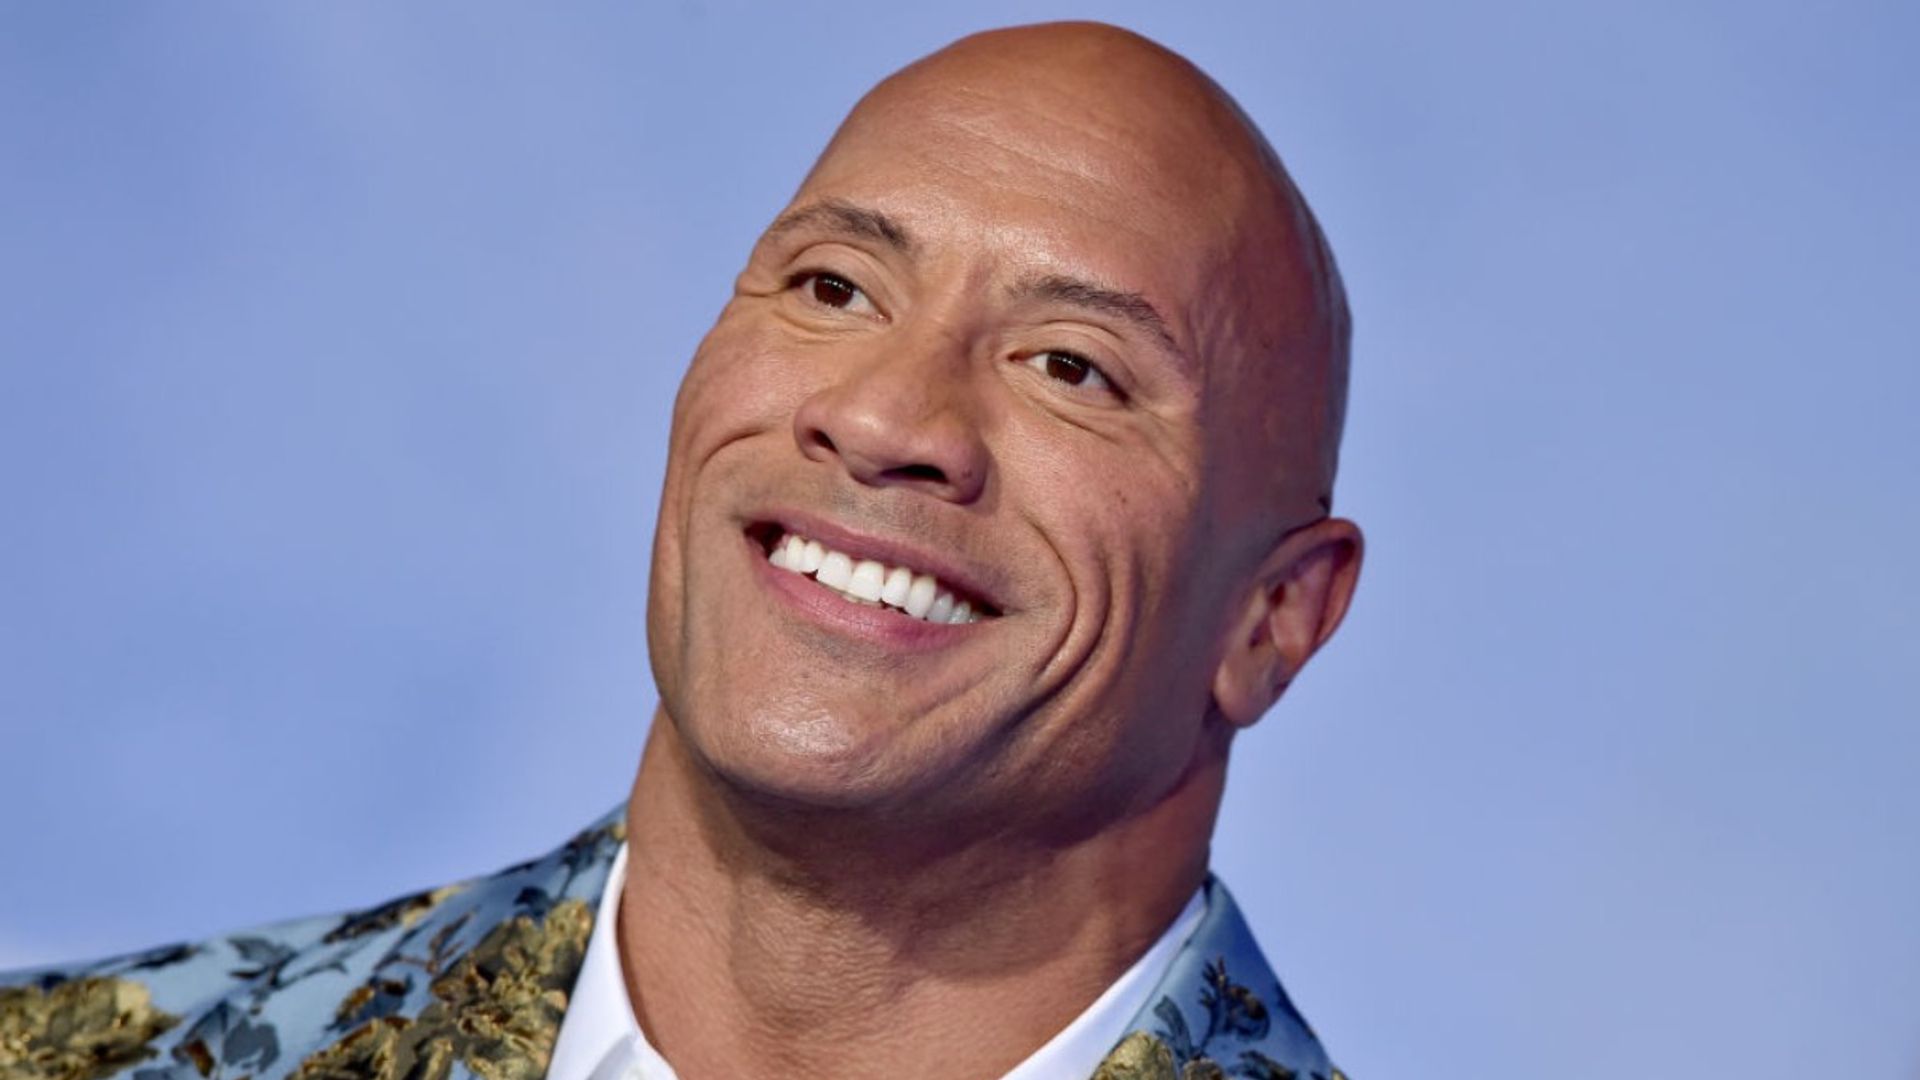 Dwayne 'The Rock' Johnson shares unbelievable gym selfie